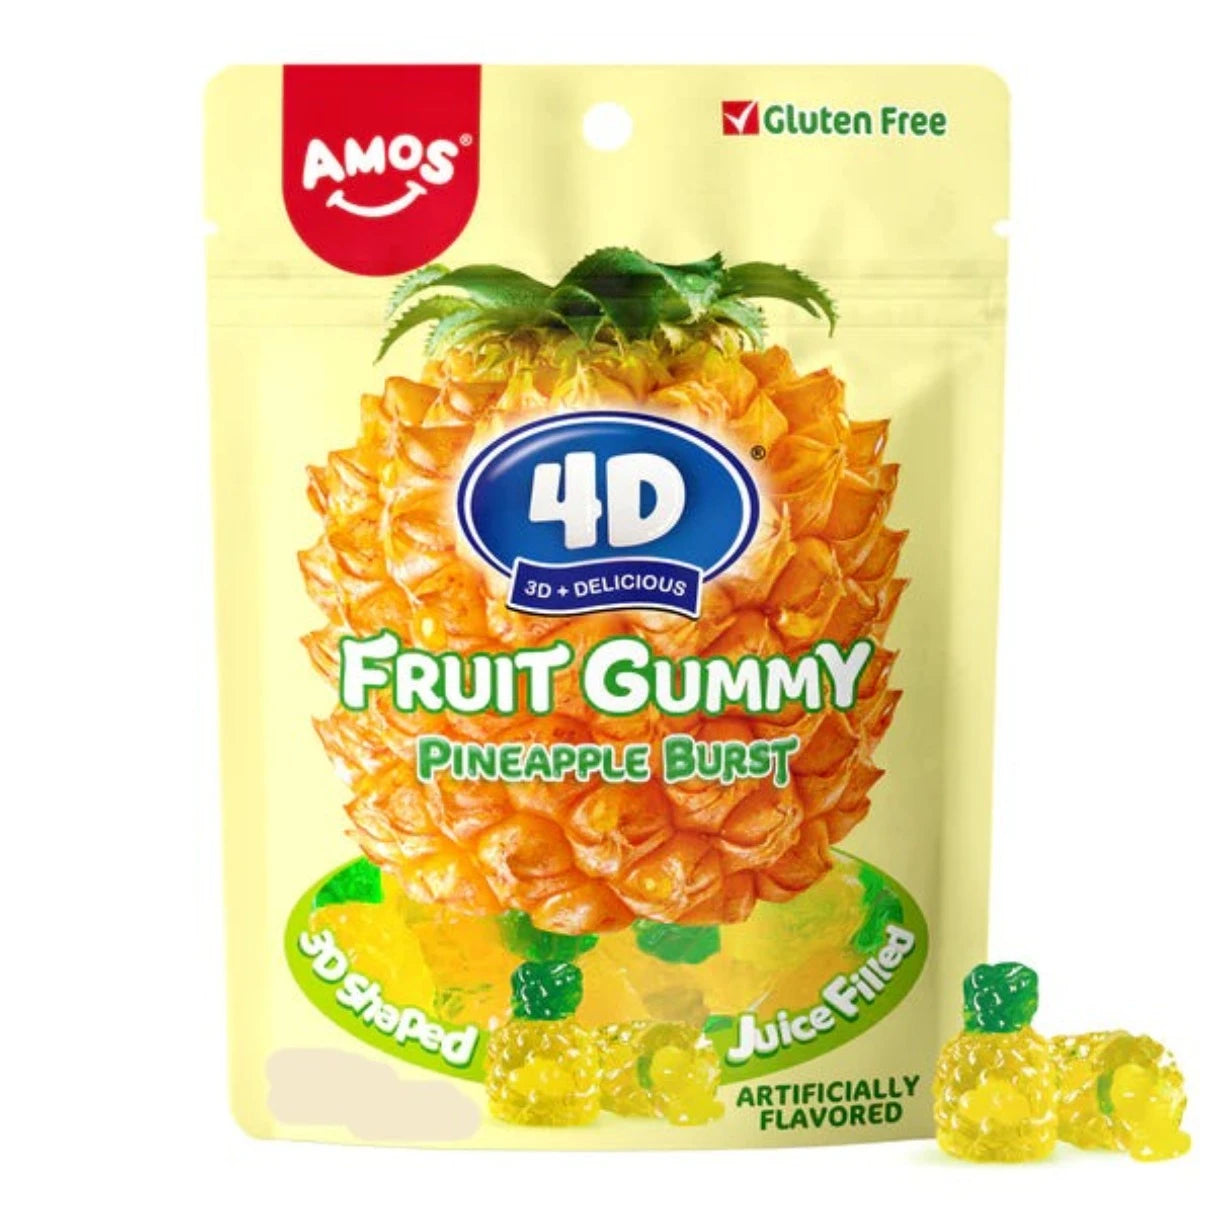 Amos 4D Fruit Gummy Pineapple Burst 6oz - 12ct